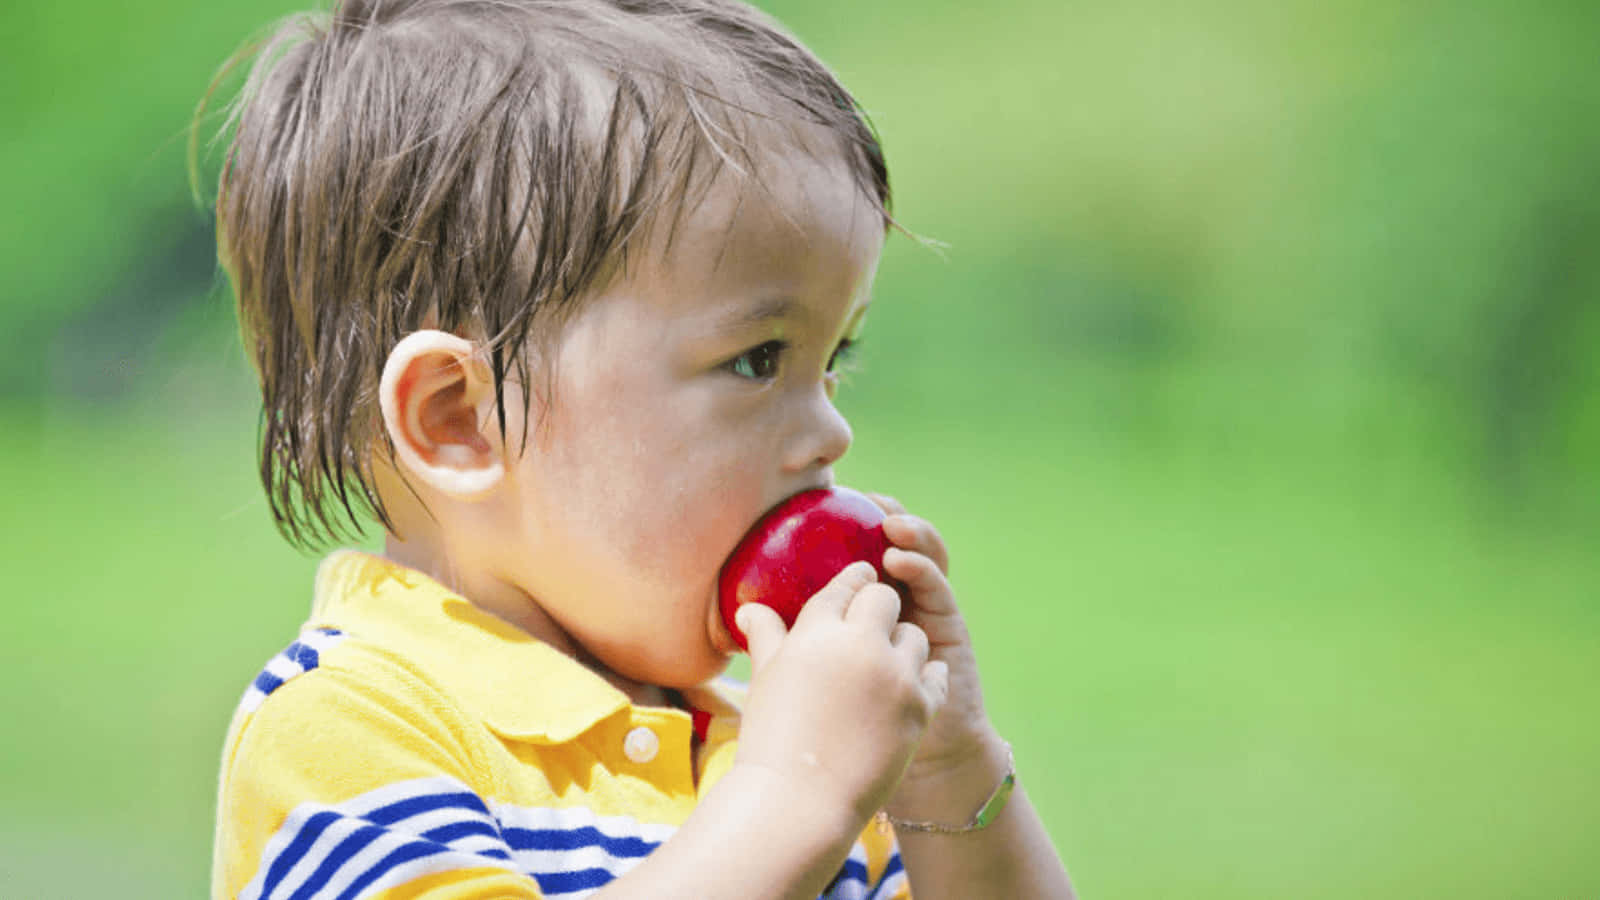 A Young Boy Eating An Apple Wallpaper